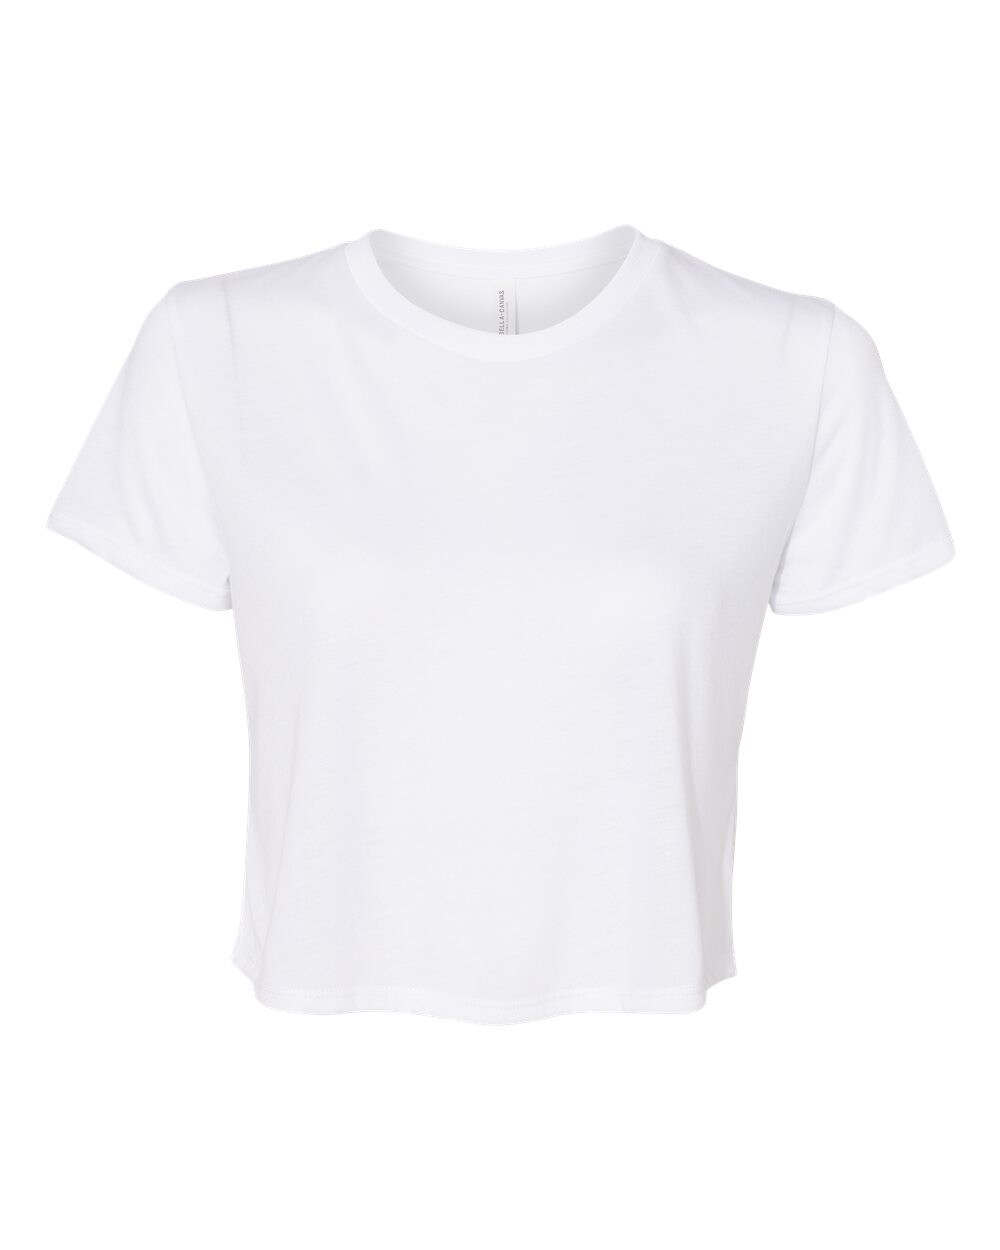 BELLA + CANVAS; Women's Flowy Cropped T-Shirt with Custom Design